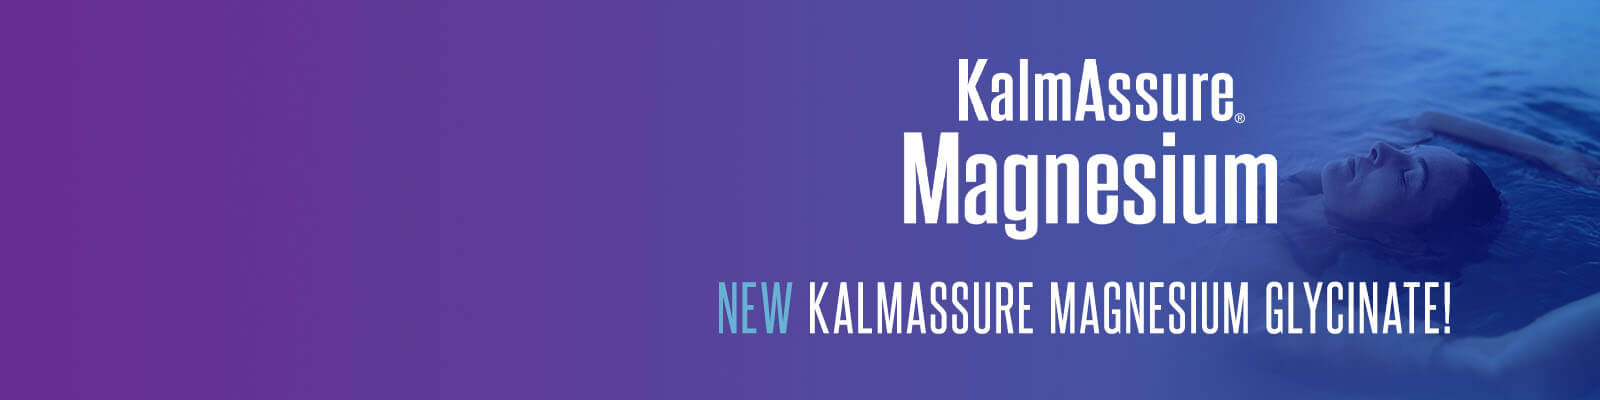 new kalmassure magnesium glycinate banner